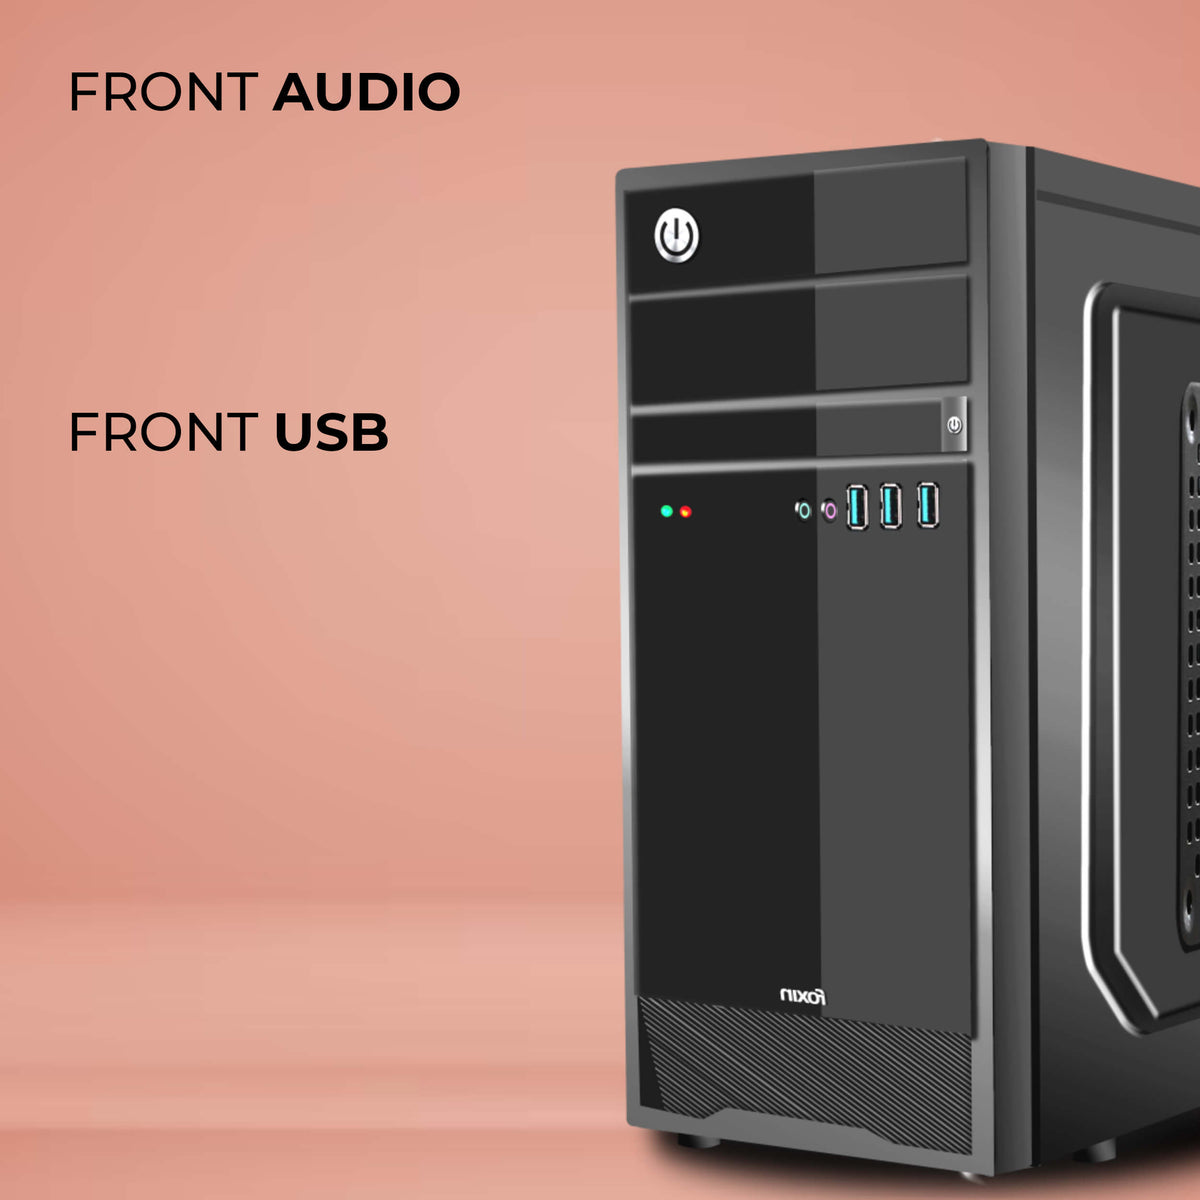 Foxin SHADE Premium PC Cabinet with Steel Metal Body | Front Panel 2 x USB 1.0 Port | HD Audio / MIC Jack Port | 8 CM x 12 CM Fan Position